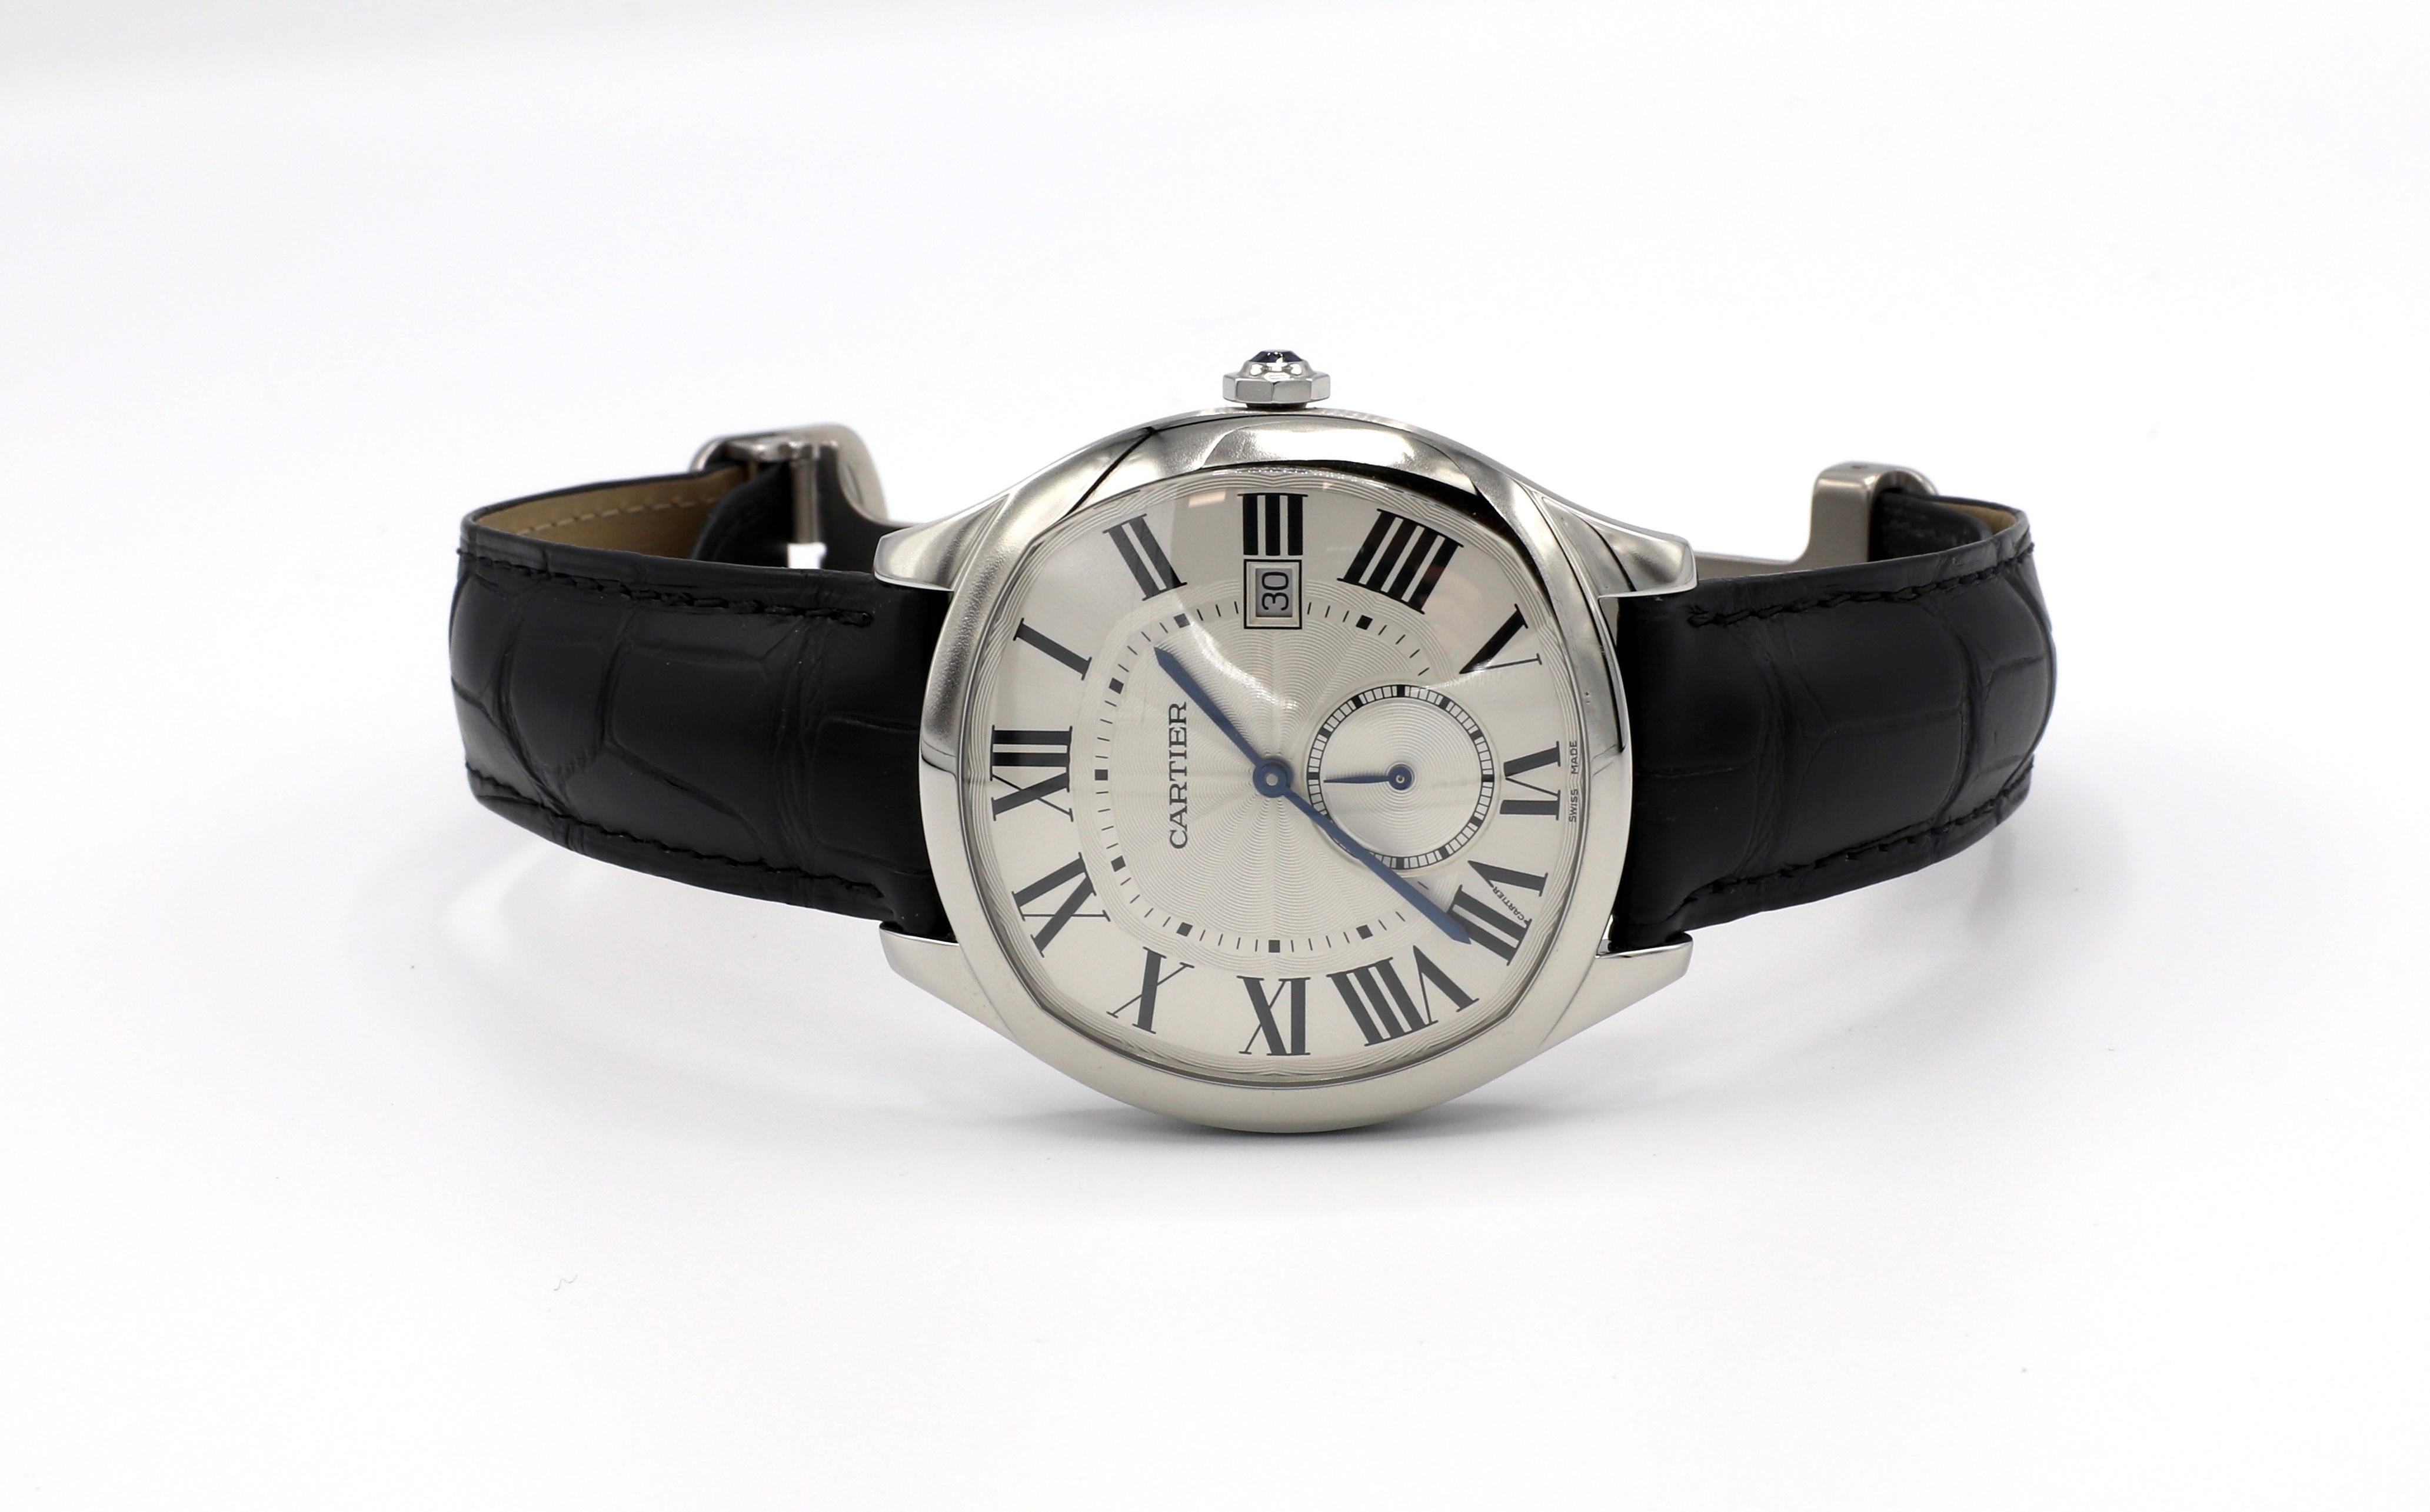 Cartier Drive De Cartier WSNM0004 Stainless Steel Leather Strap Men's Watch 5